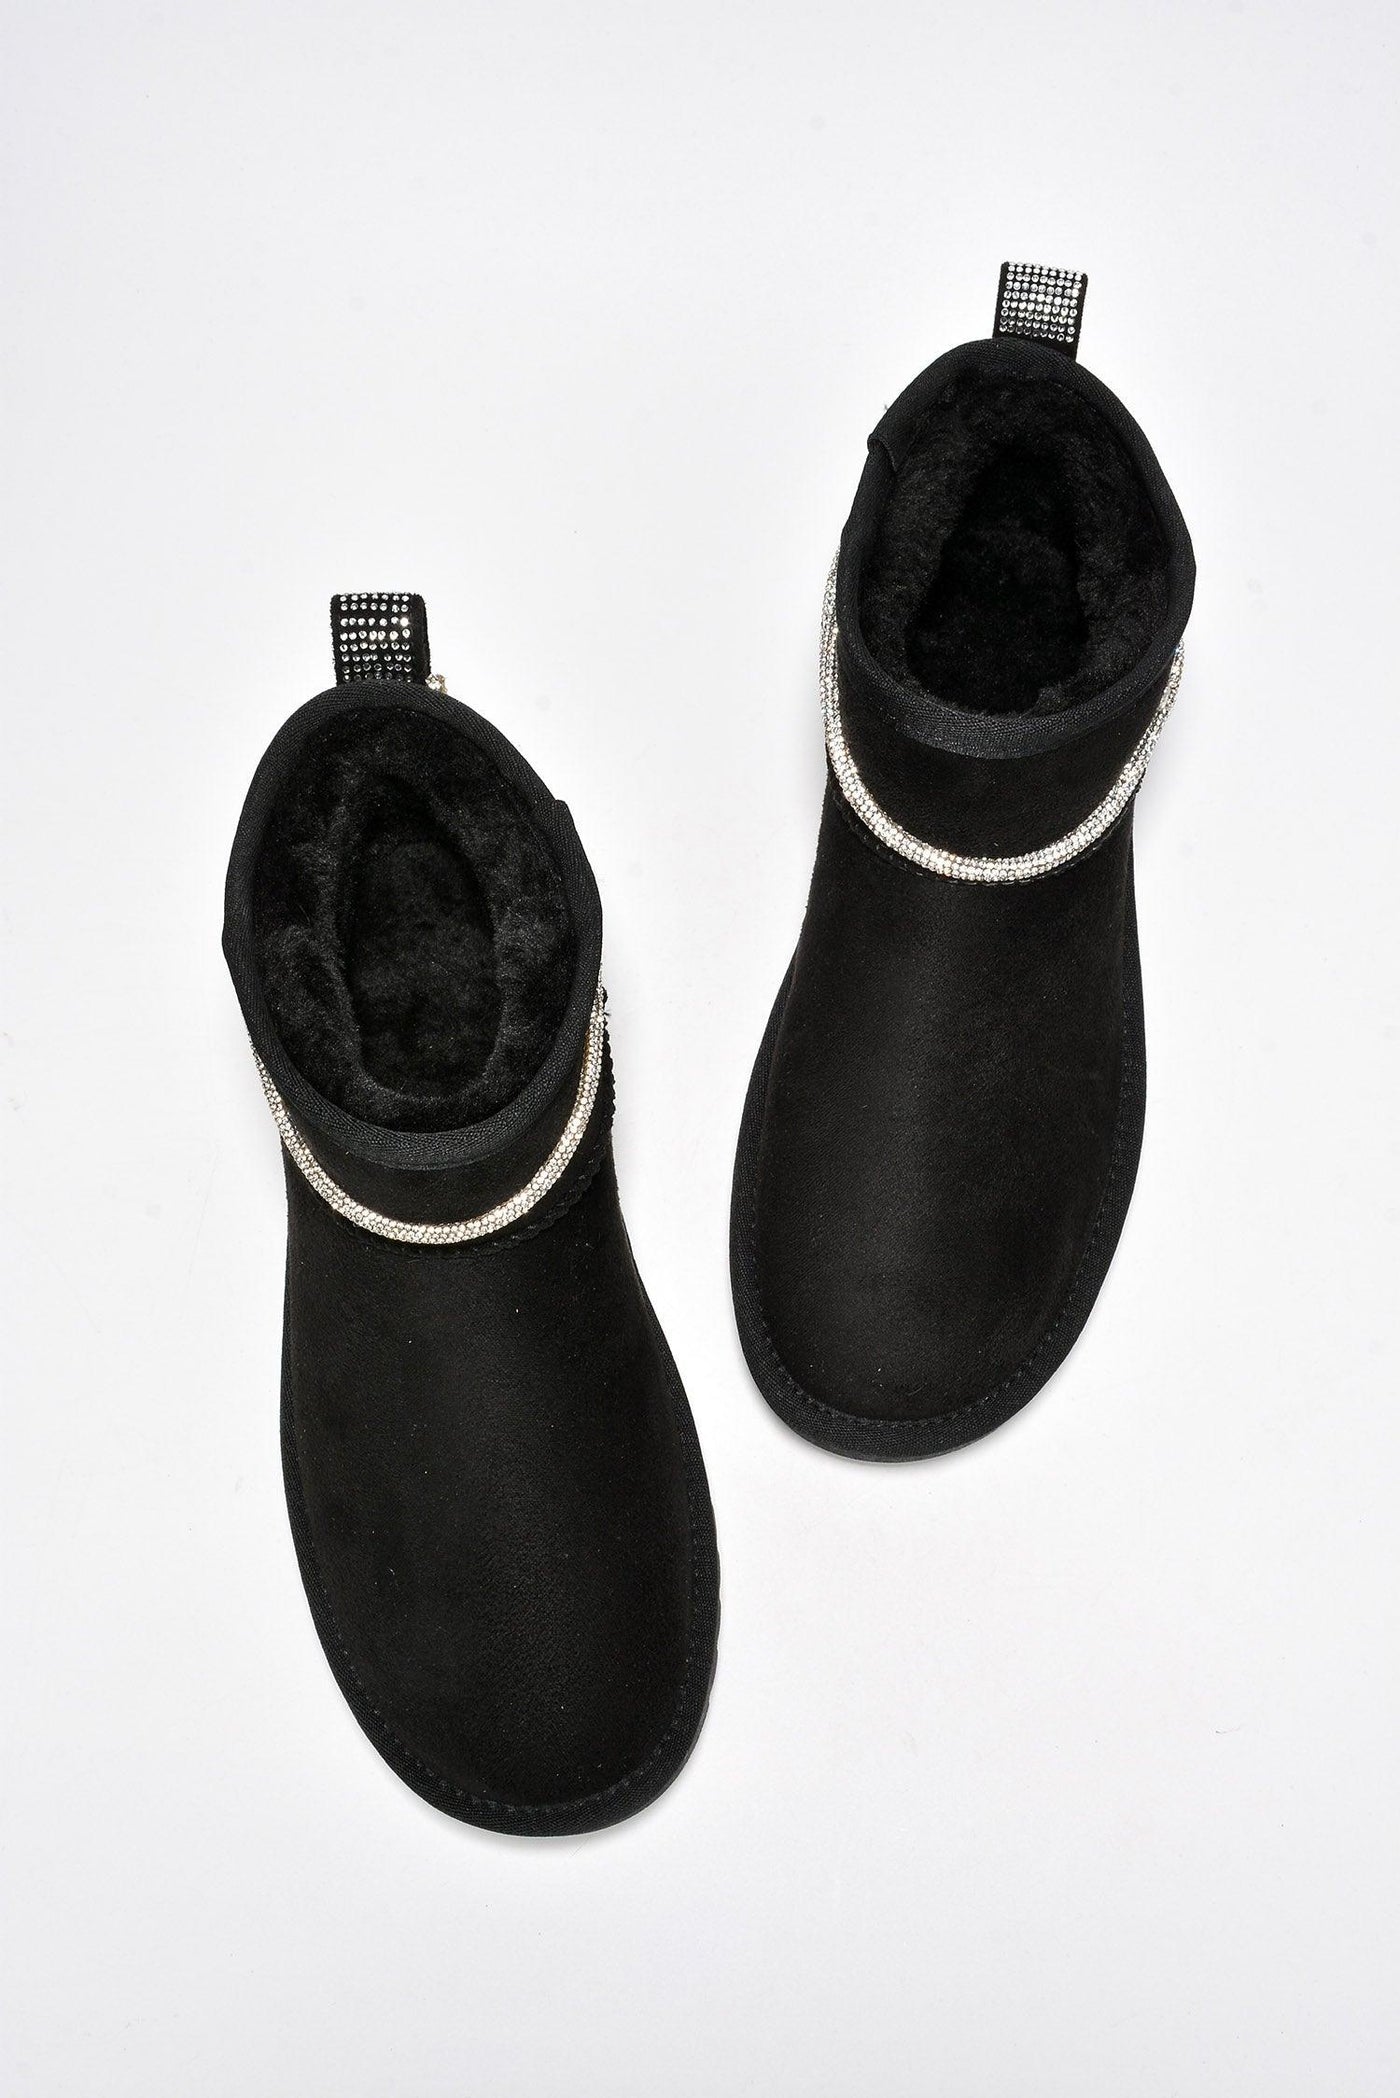 TULSA - BLACK - AMIClubwear